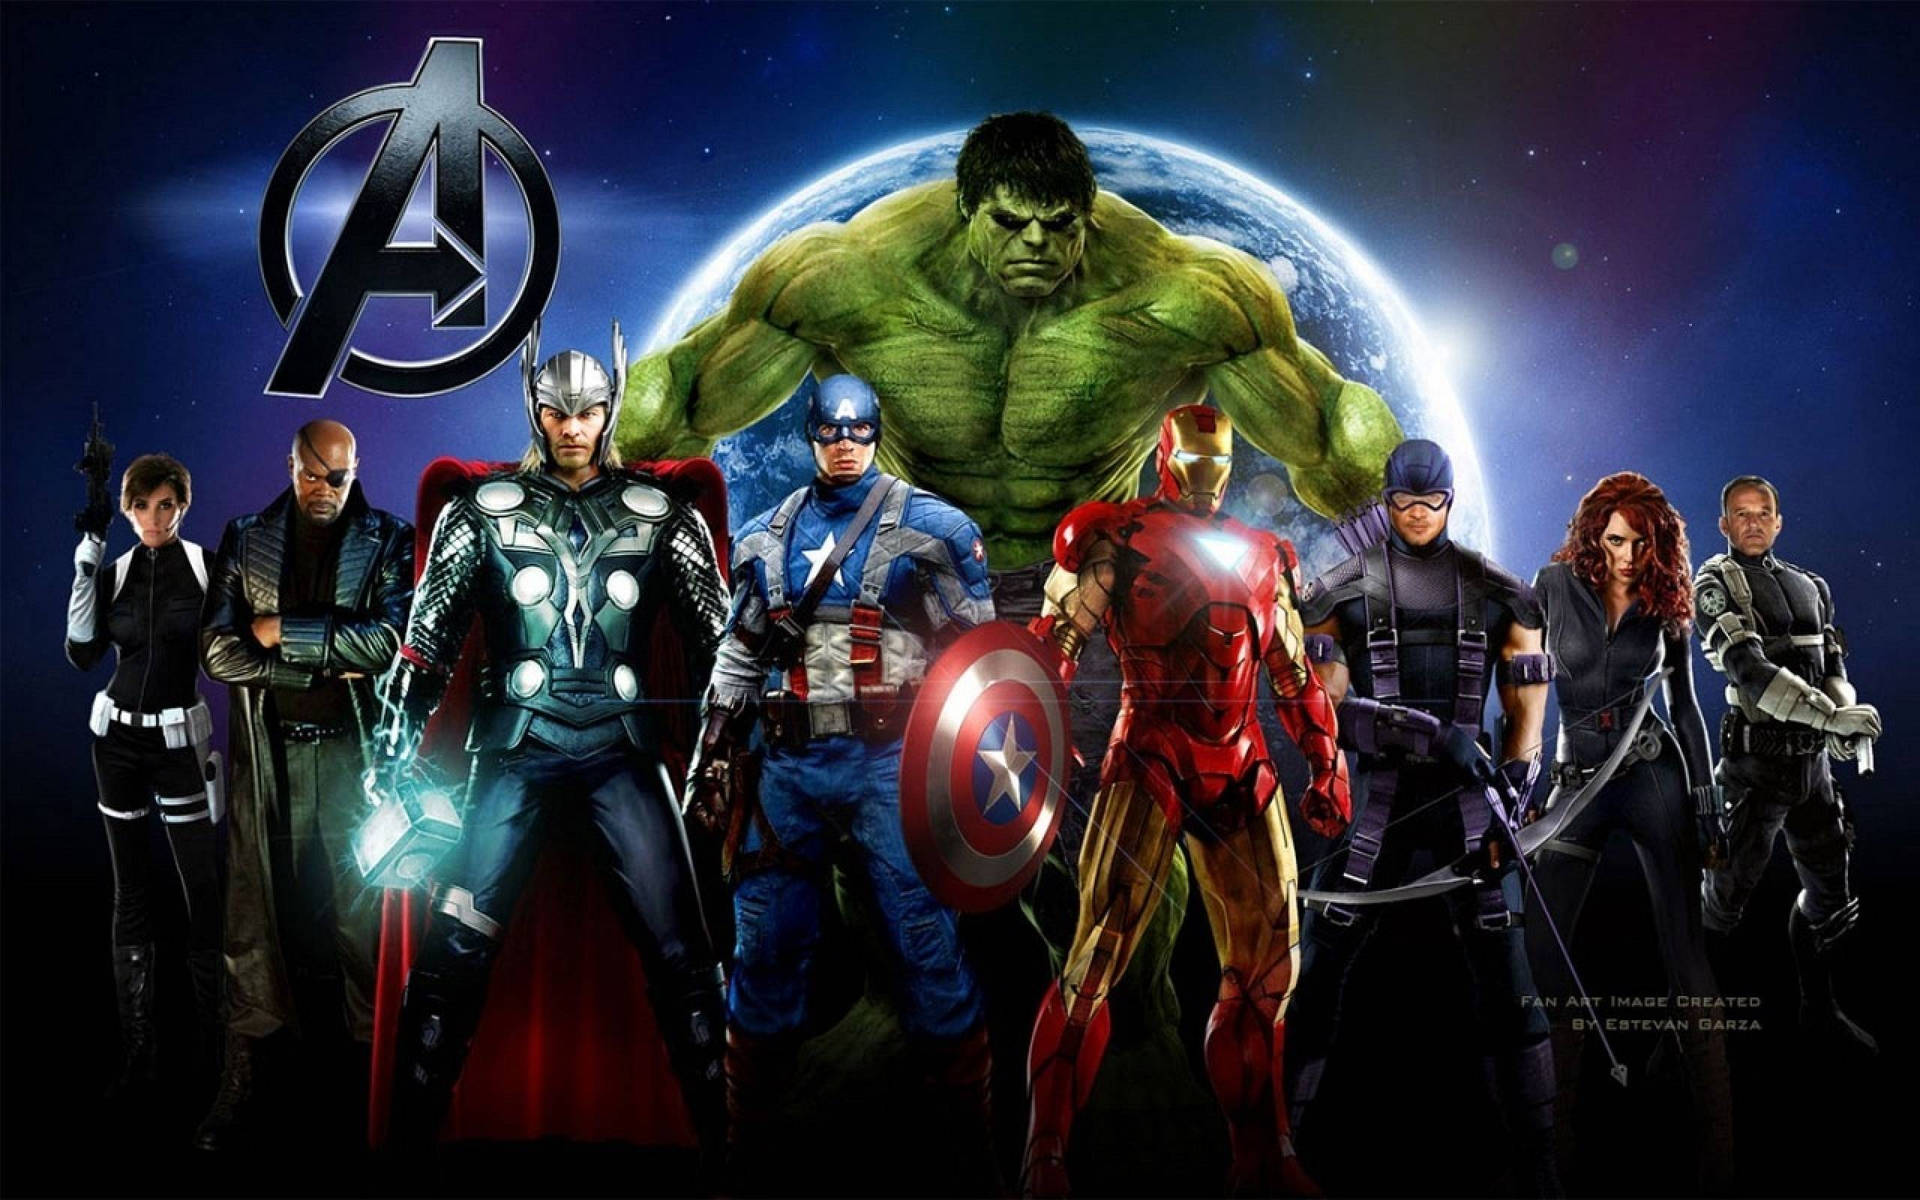 Die Besten Avengers Bilder